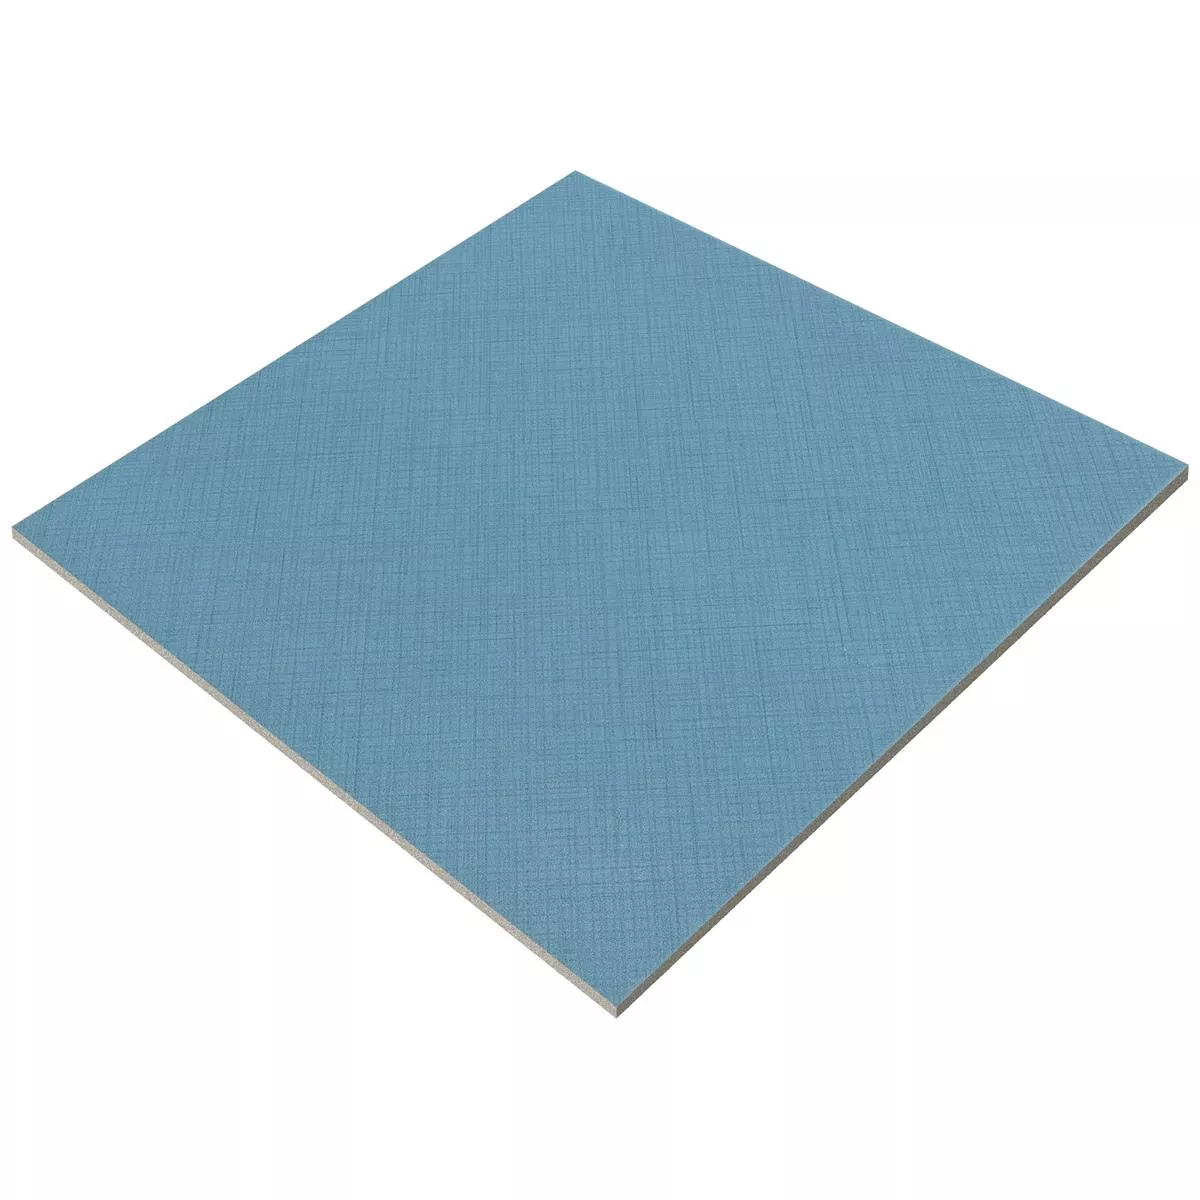 Vzorek Podlahové Dlaždice Cementový Vzhled Wildflower Modrá Základní Dlaždice 18,5x18,5cm